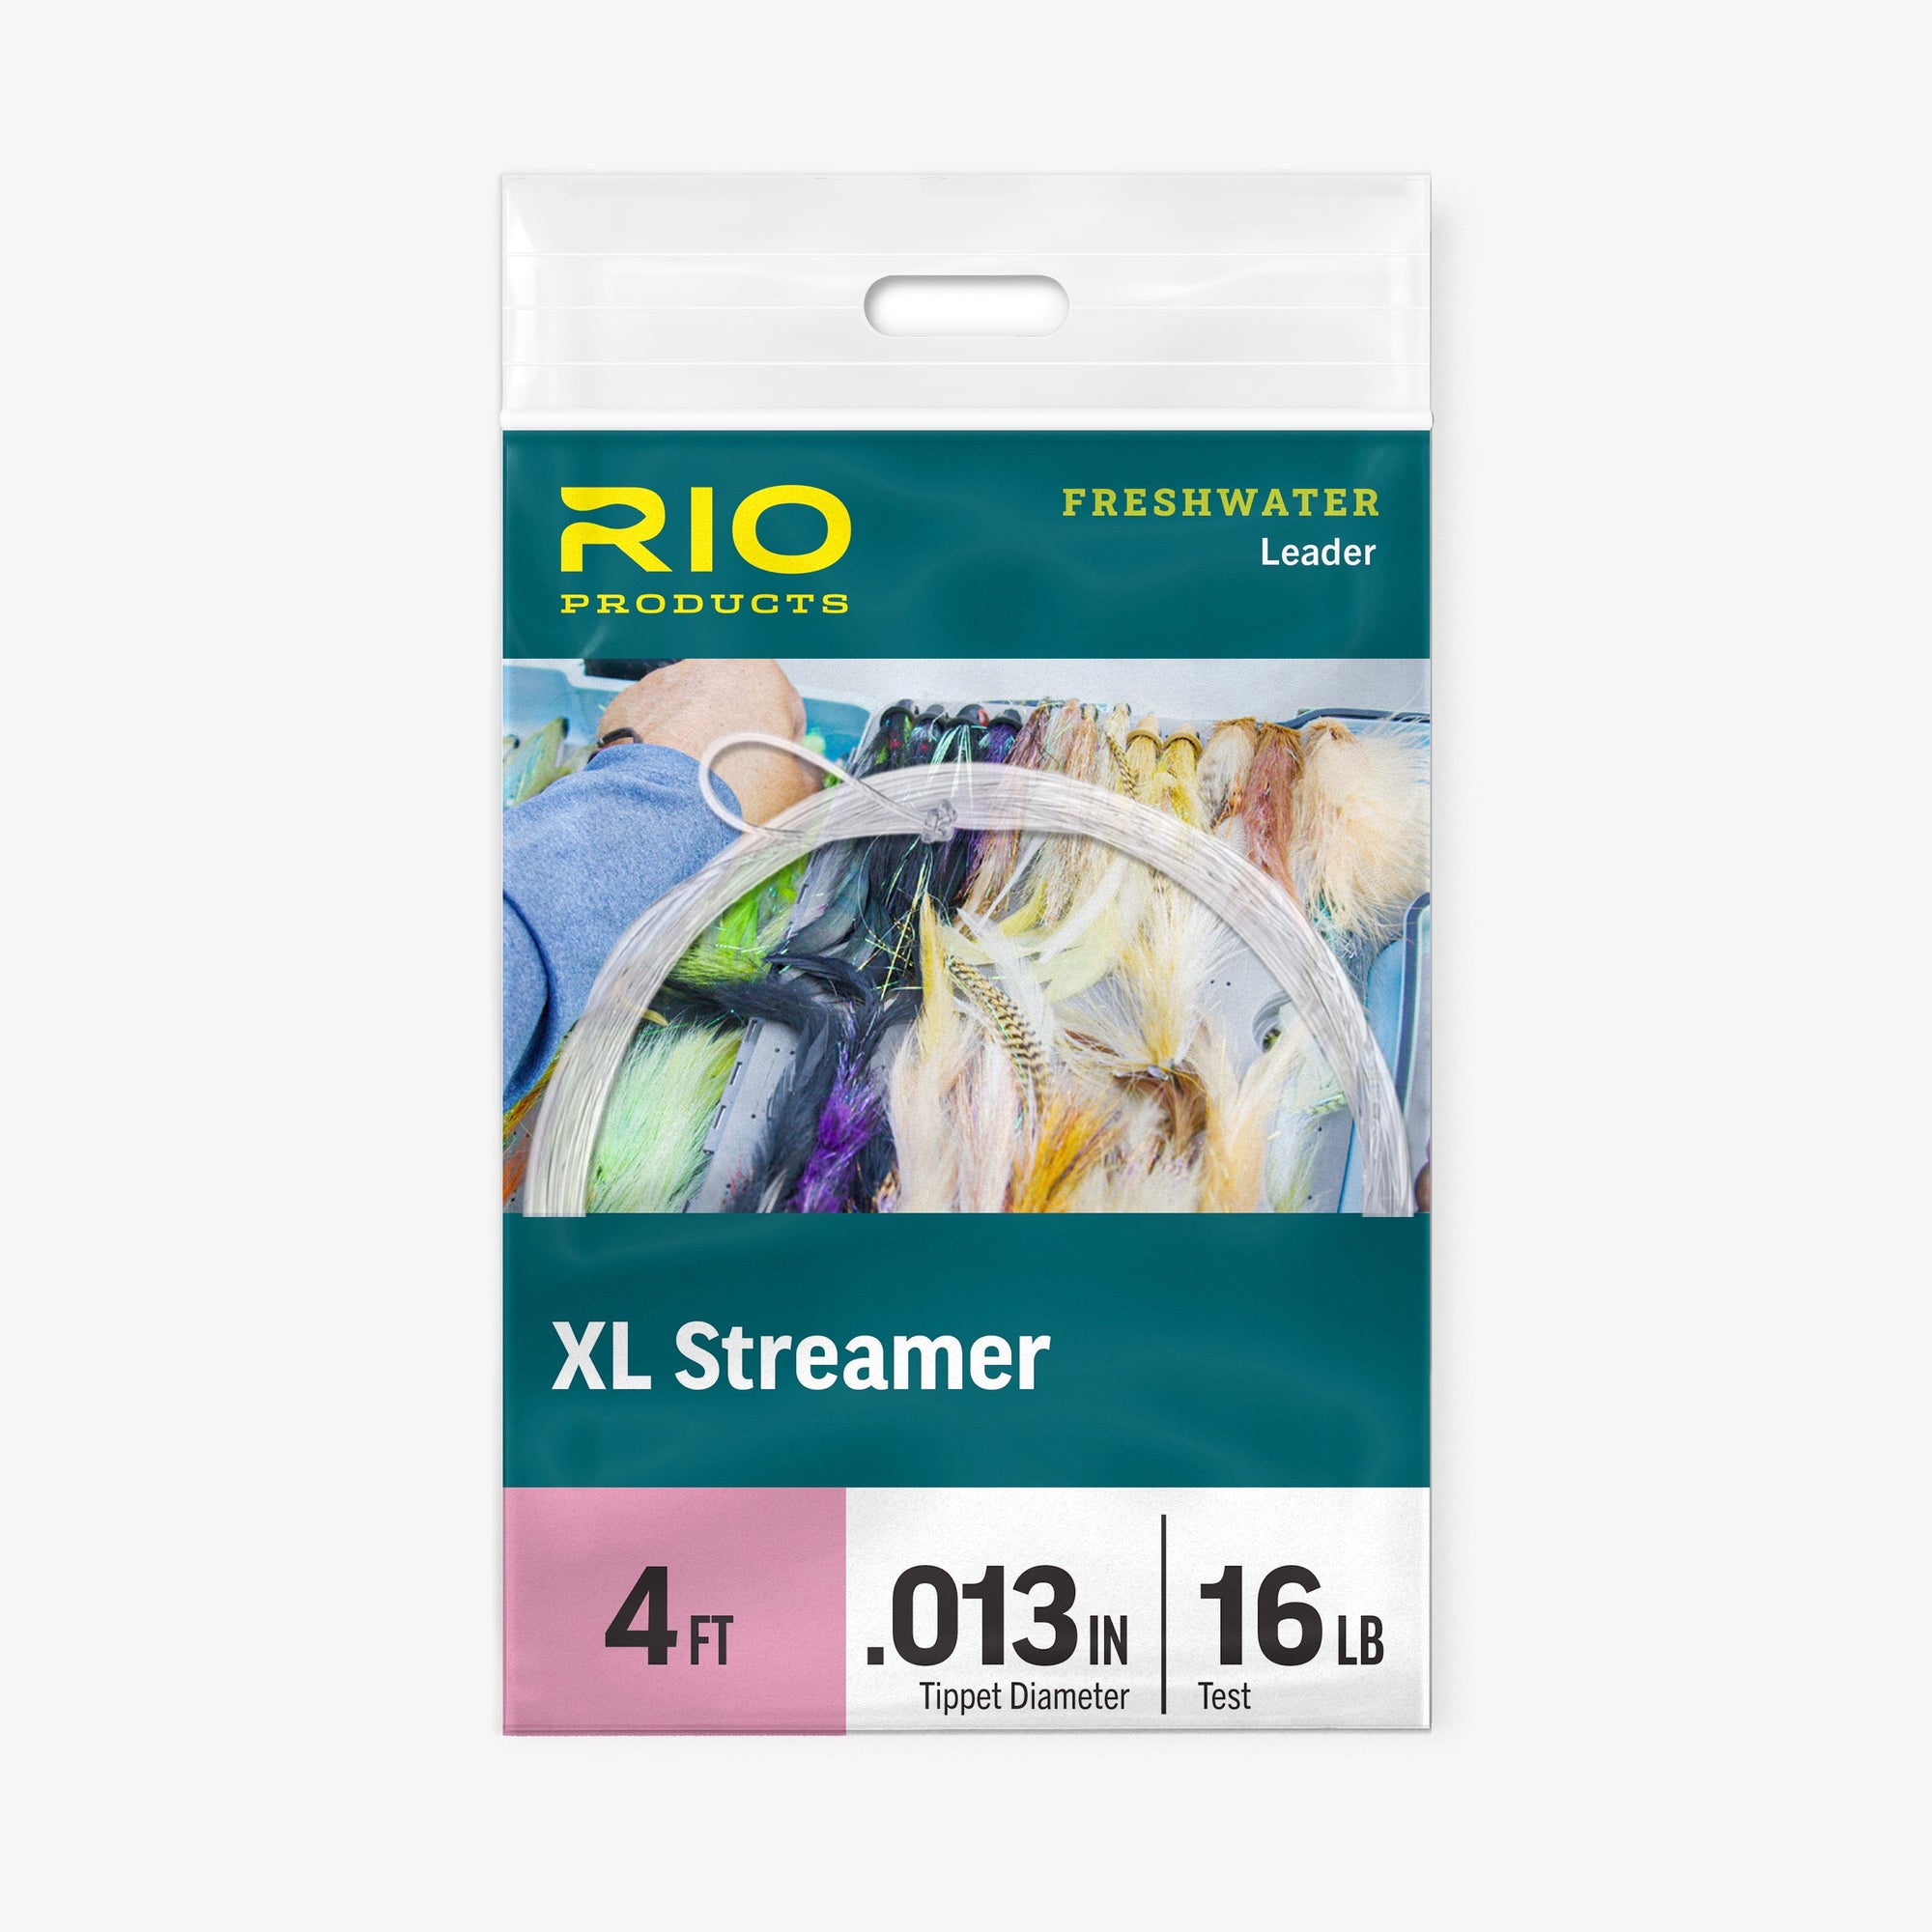 RIO XL Streamer Leader